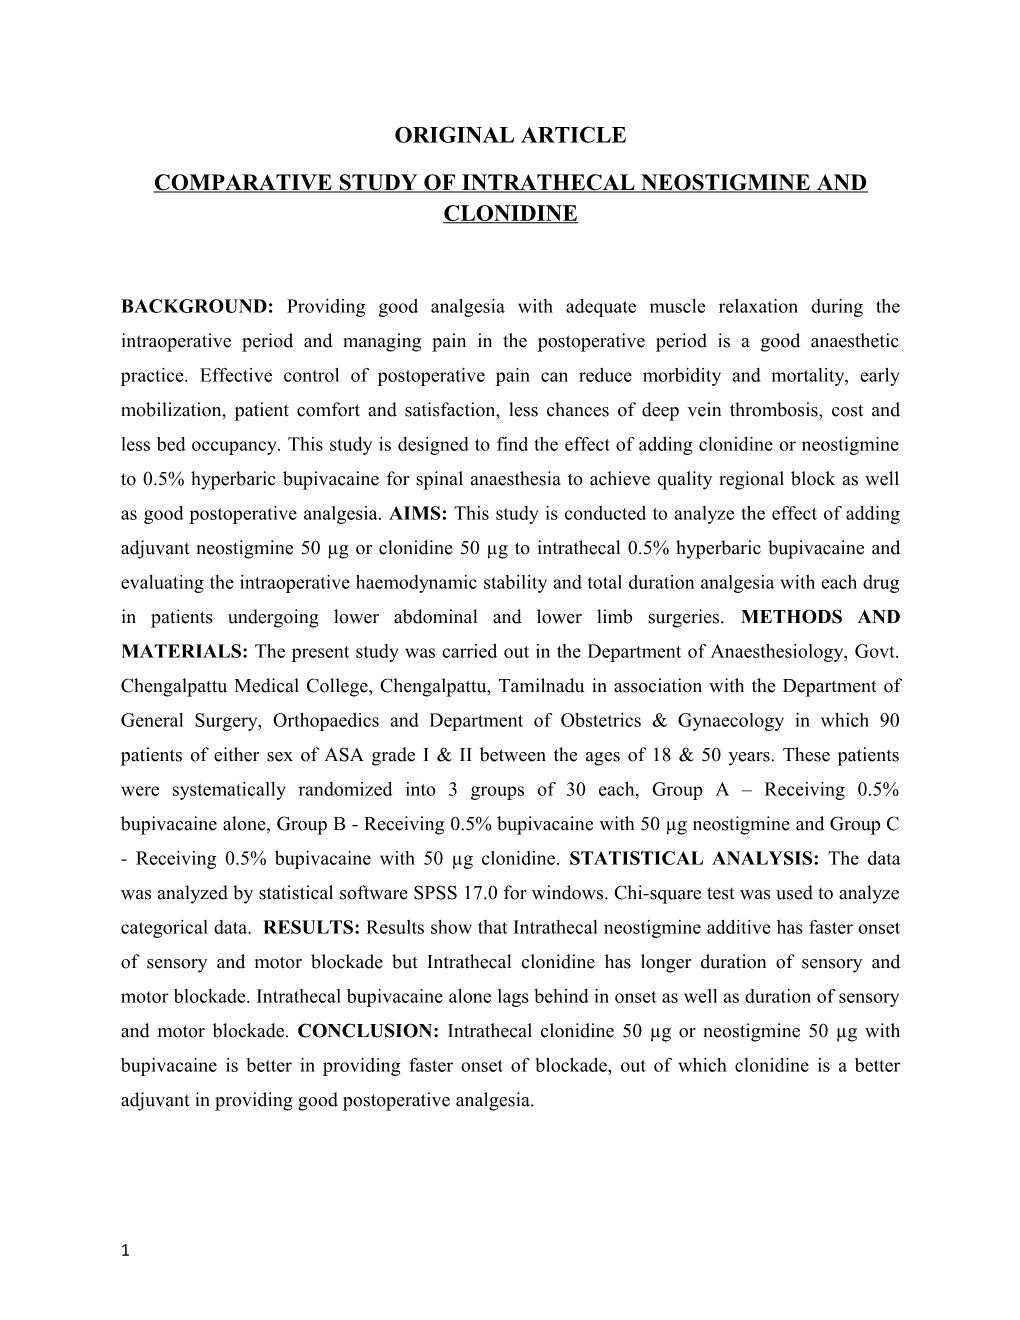 Comparative Study of Intrathecal Neostigmine and Clonidine